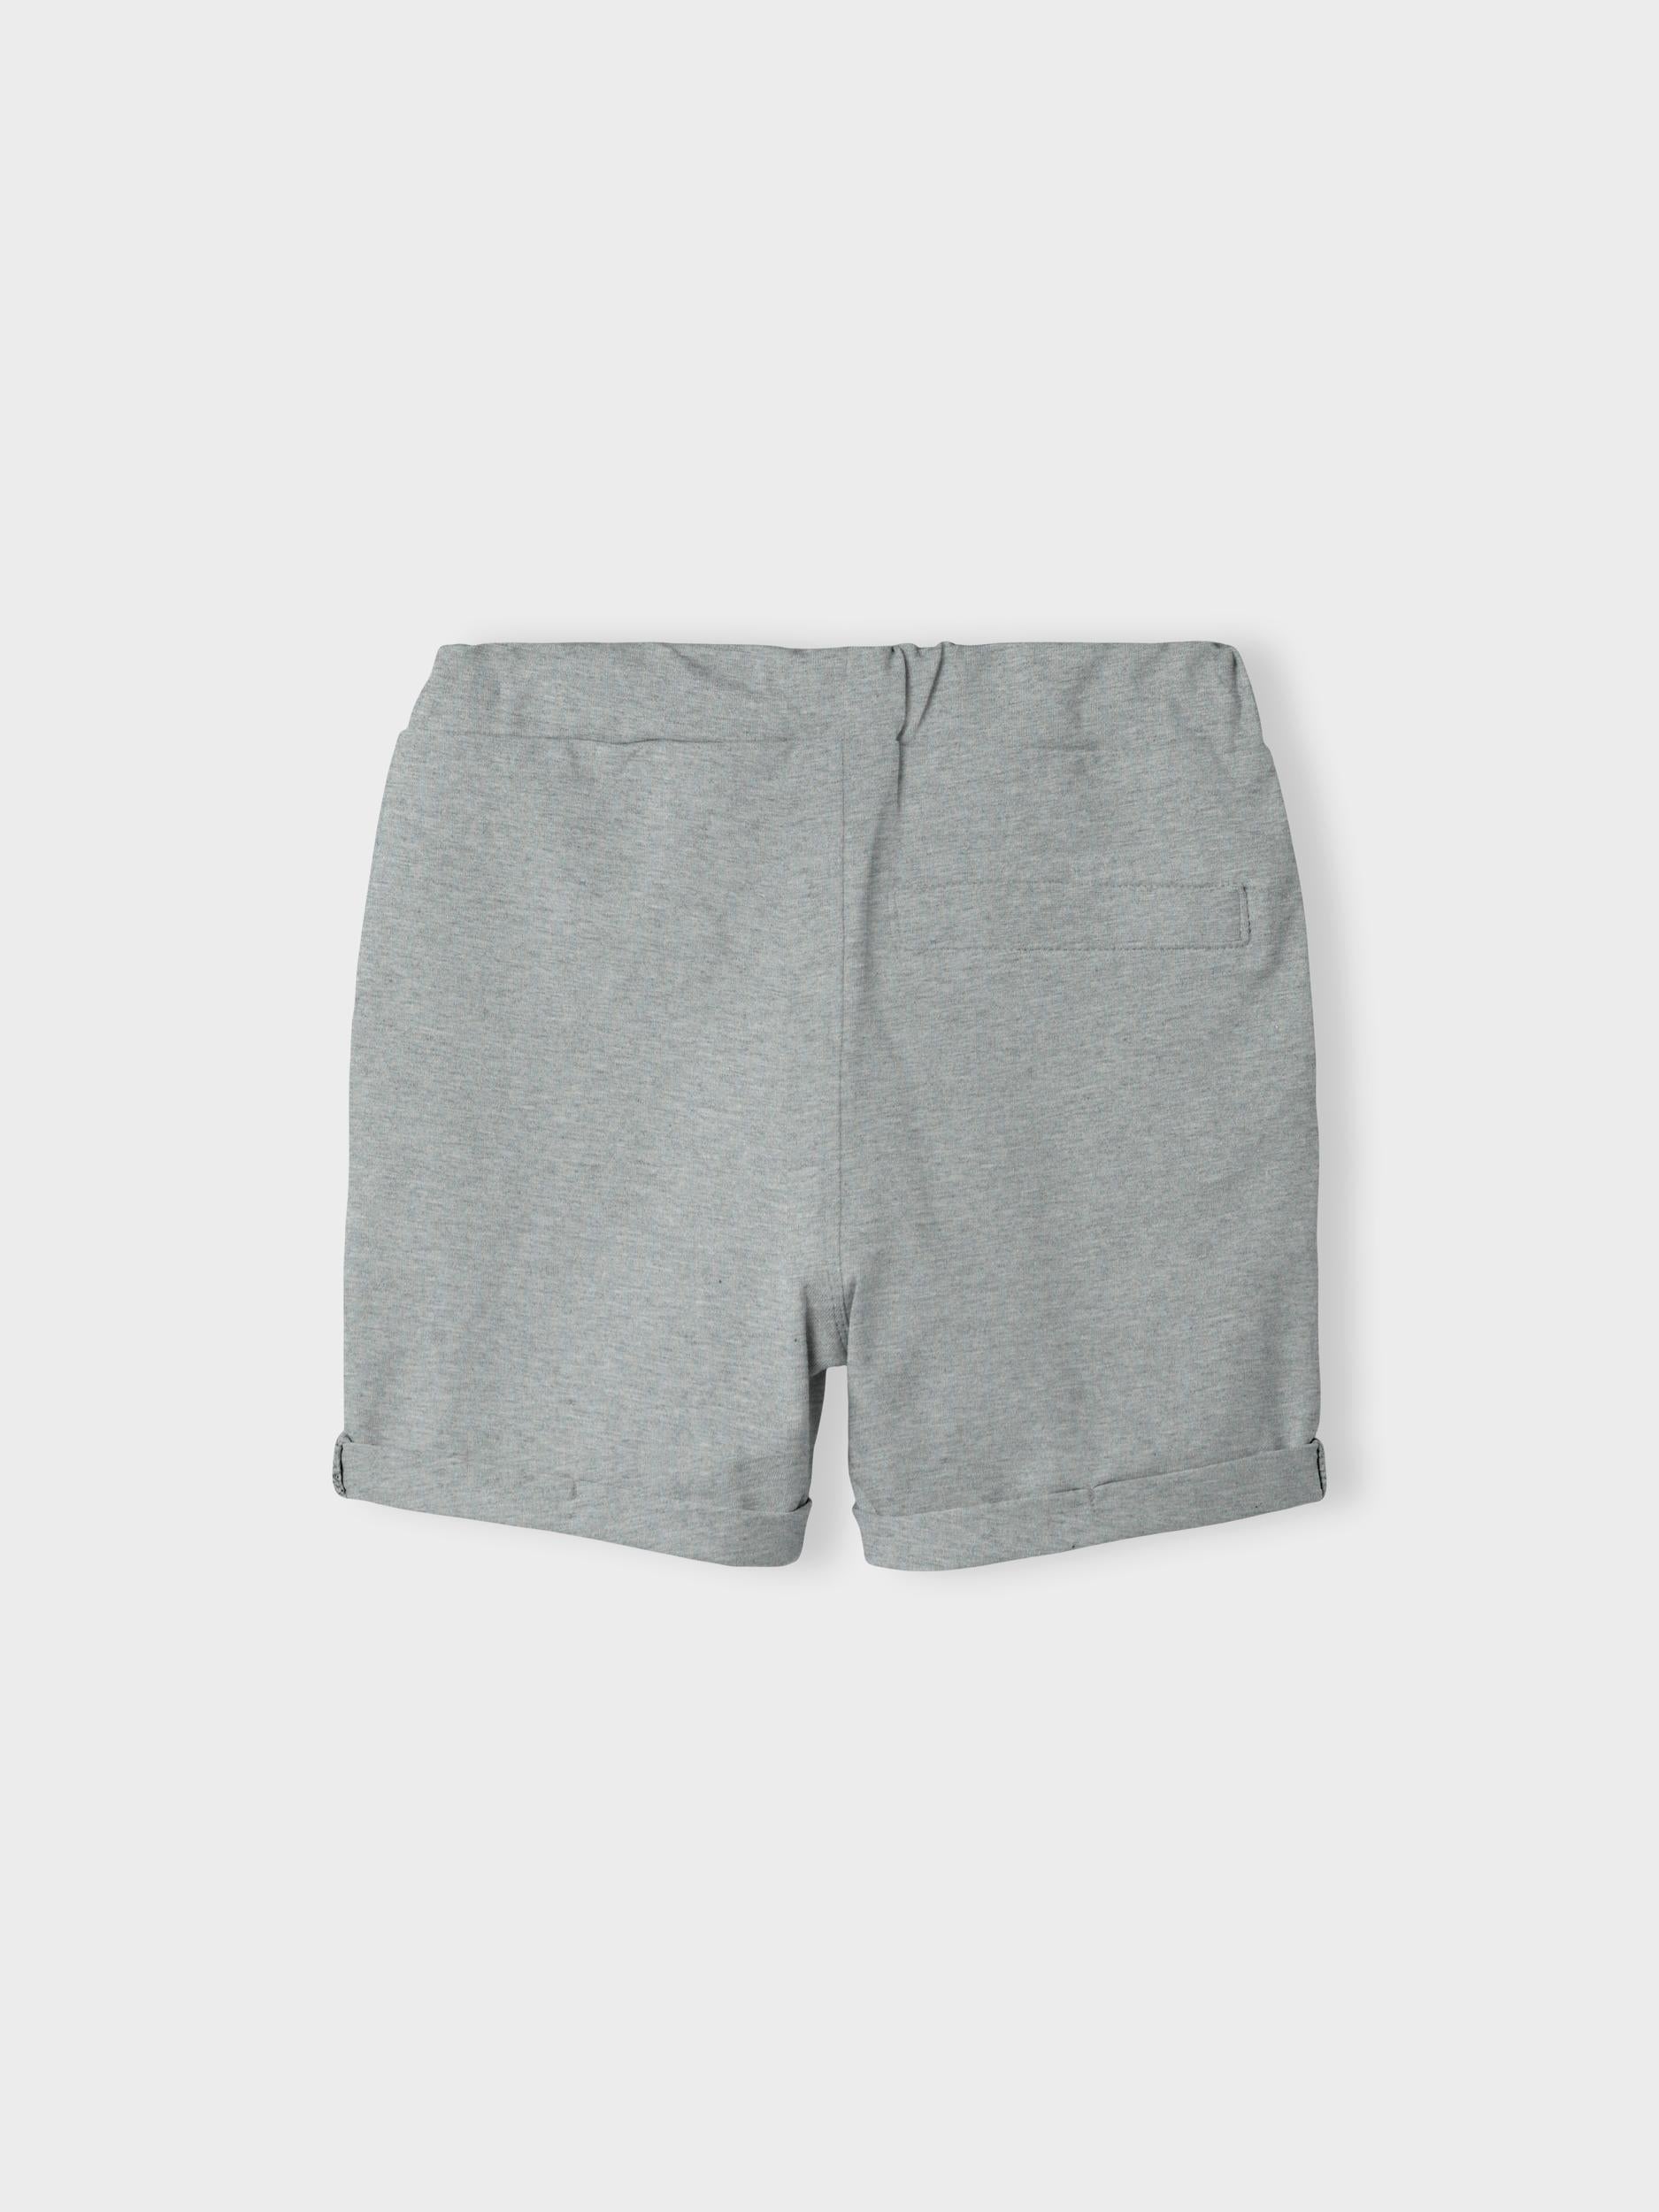 Viking Long Shorts - Grey Melange Rear View